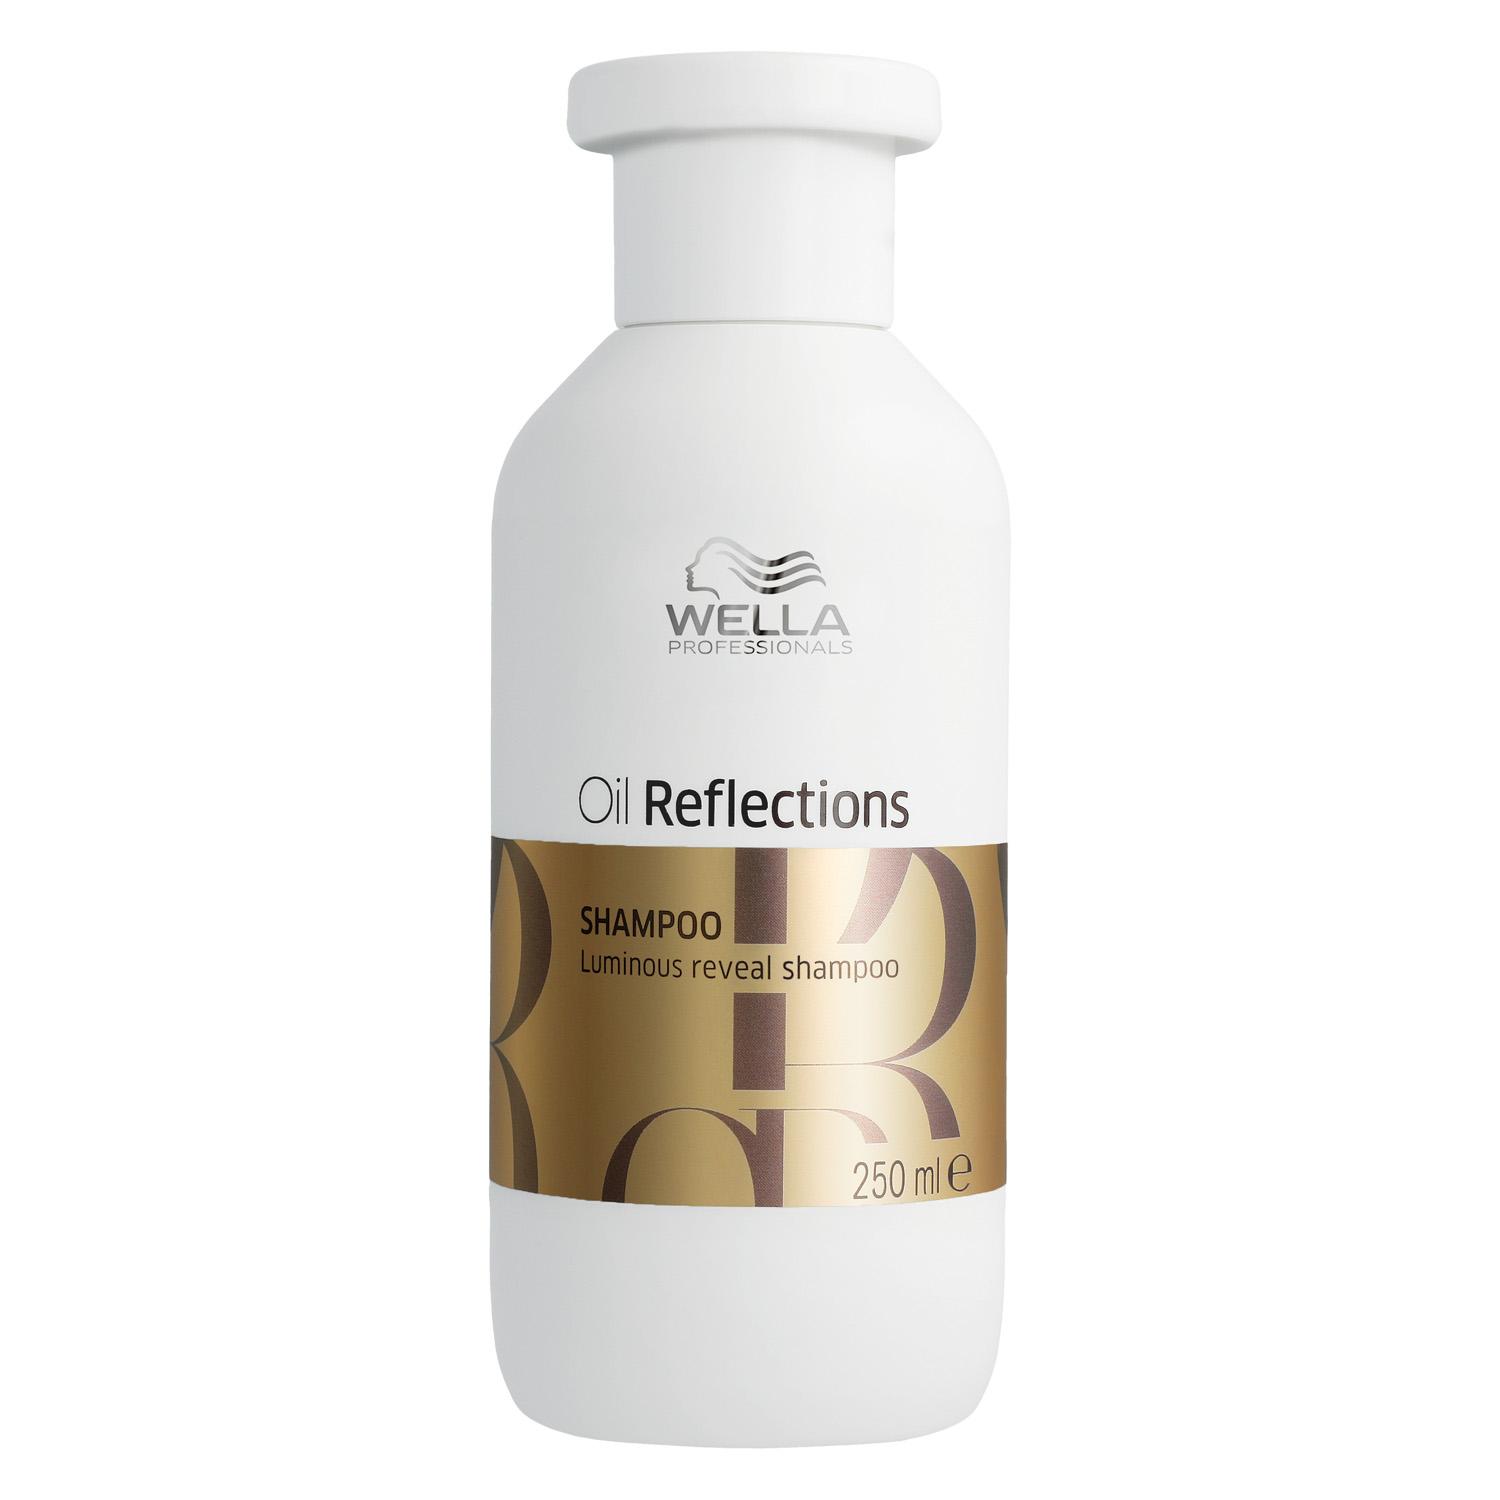 Oil Reflections - Shampoo